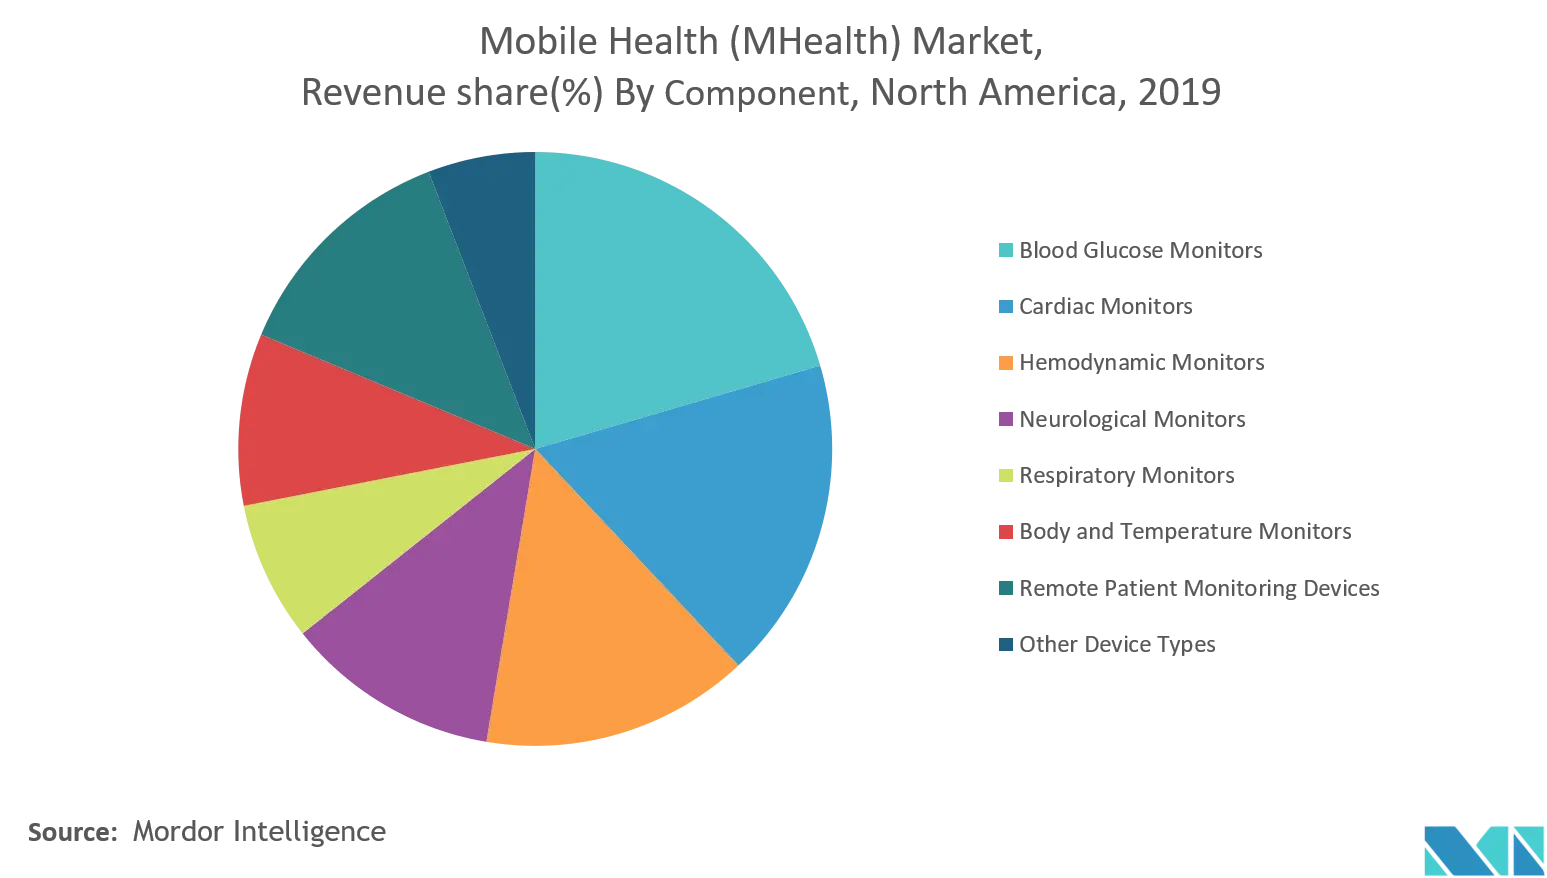 North America Mobile Health (MHealth) Market Trends